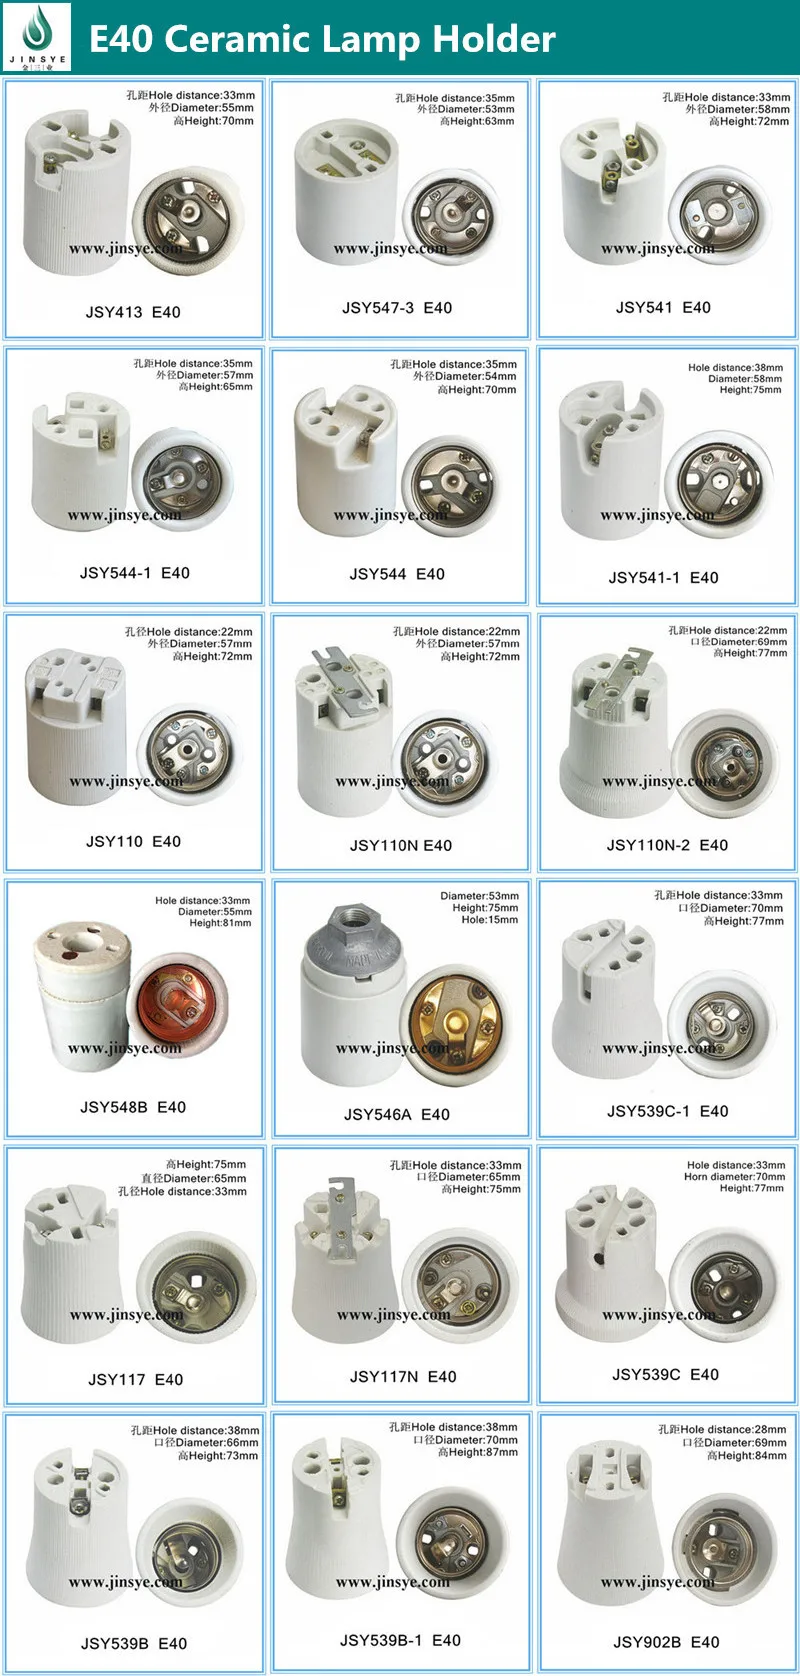 10x E27 Edison Screw to Goliath E40 Ceramic Lamp Light Socket Adaptor Converter 